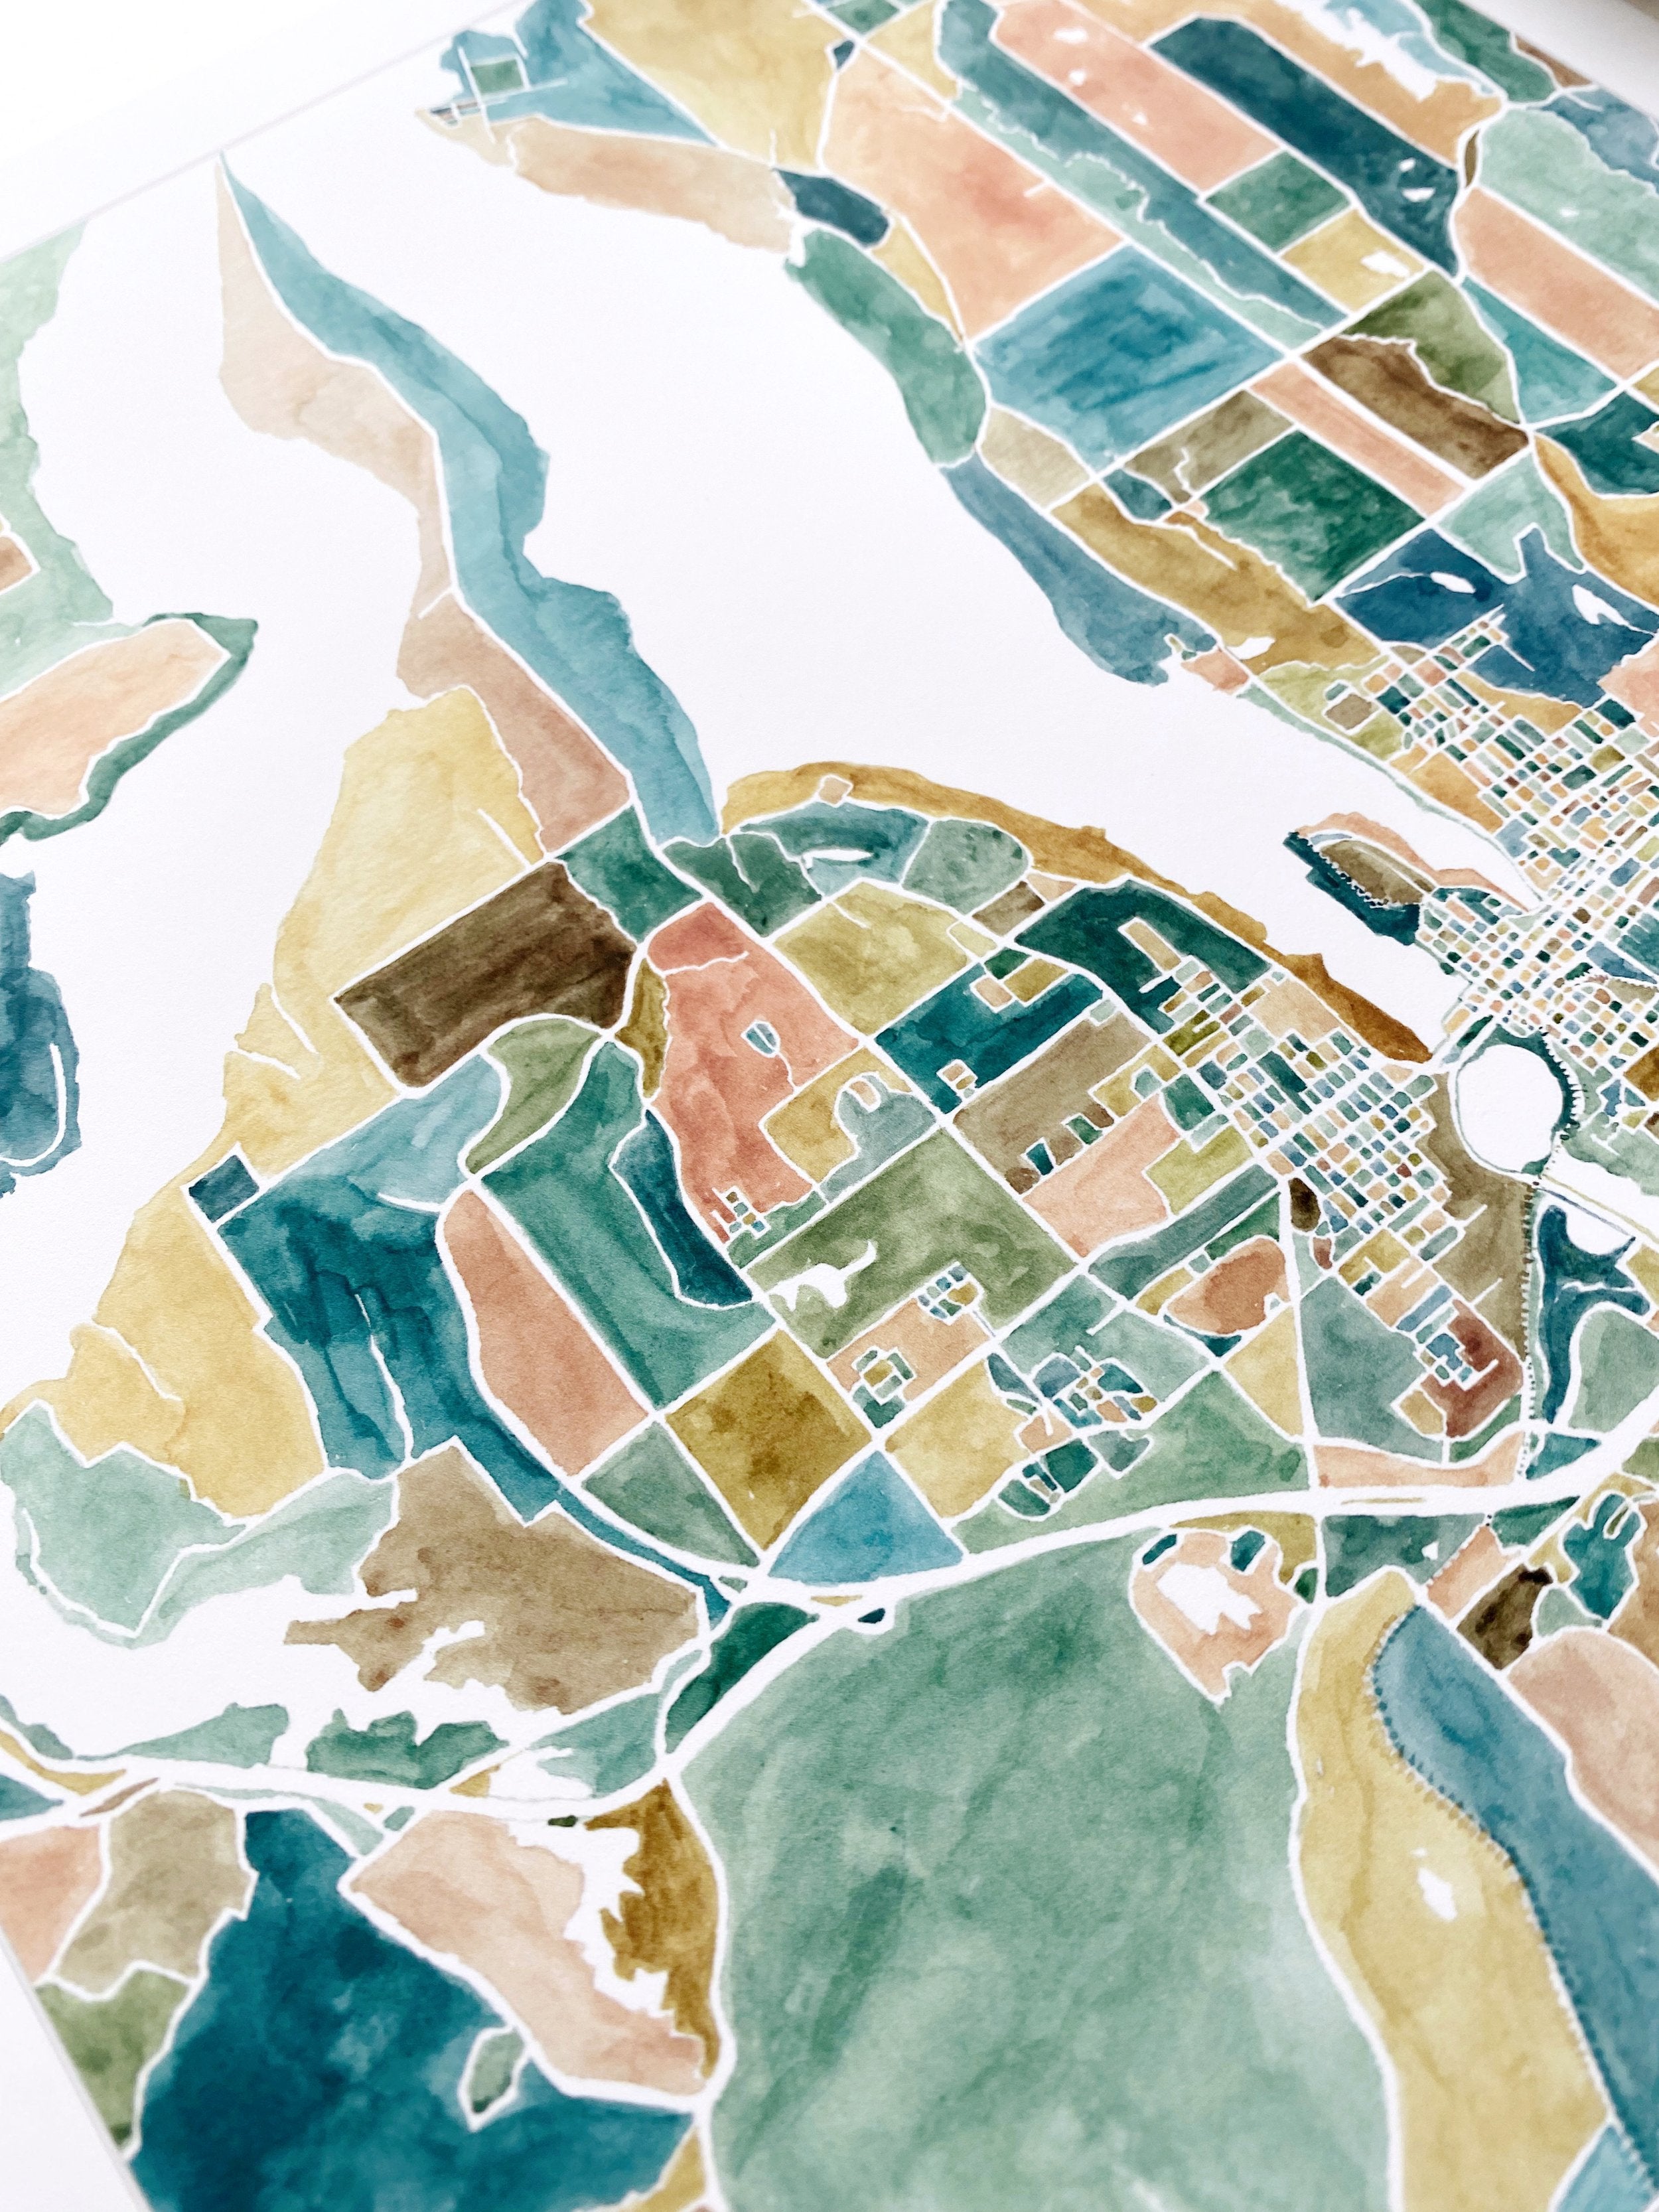 OLYMPIA ColorFULL Watercolor City Blocks Map: ORIGINAL PAINTING